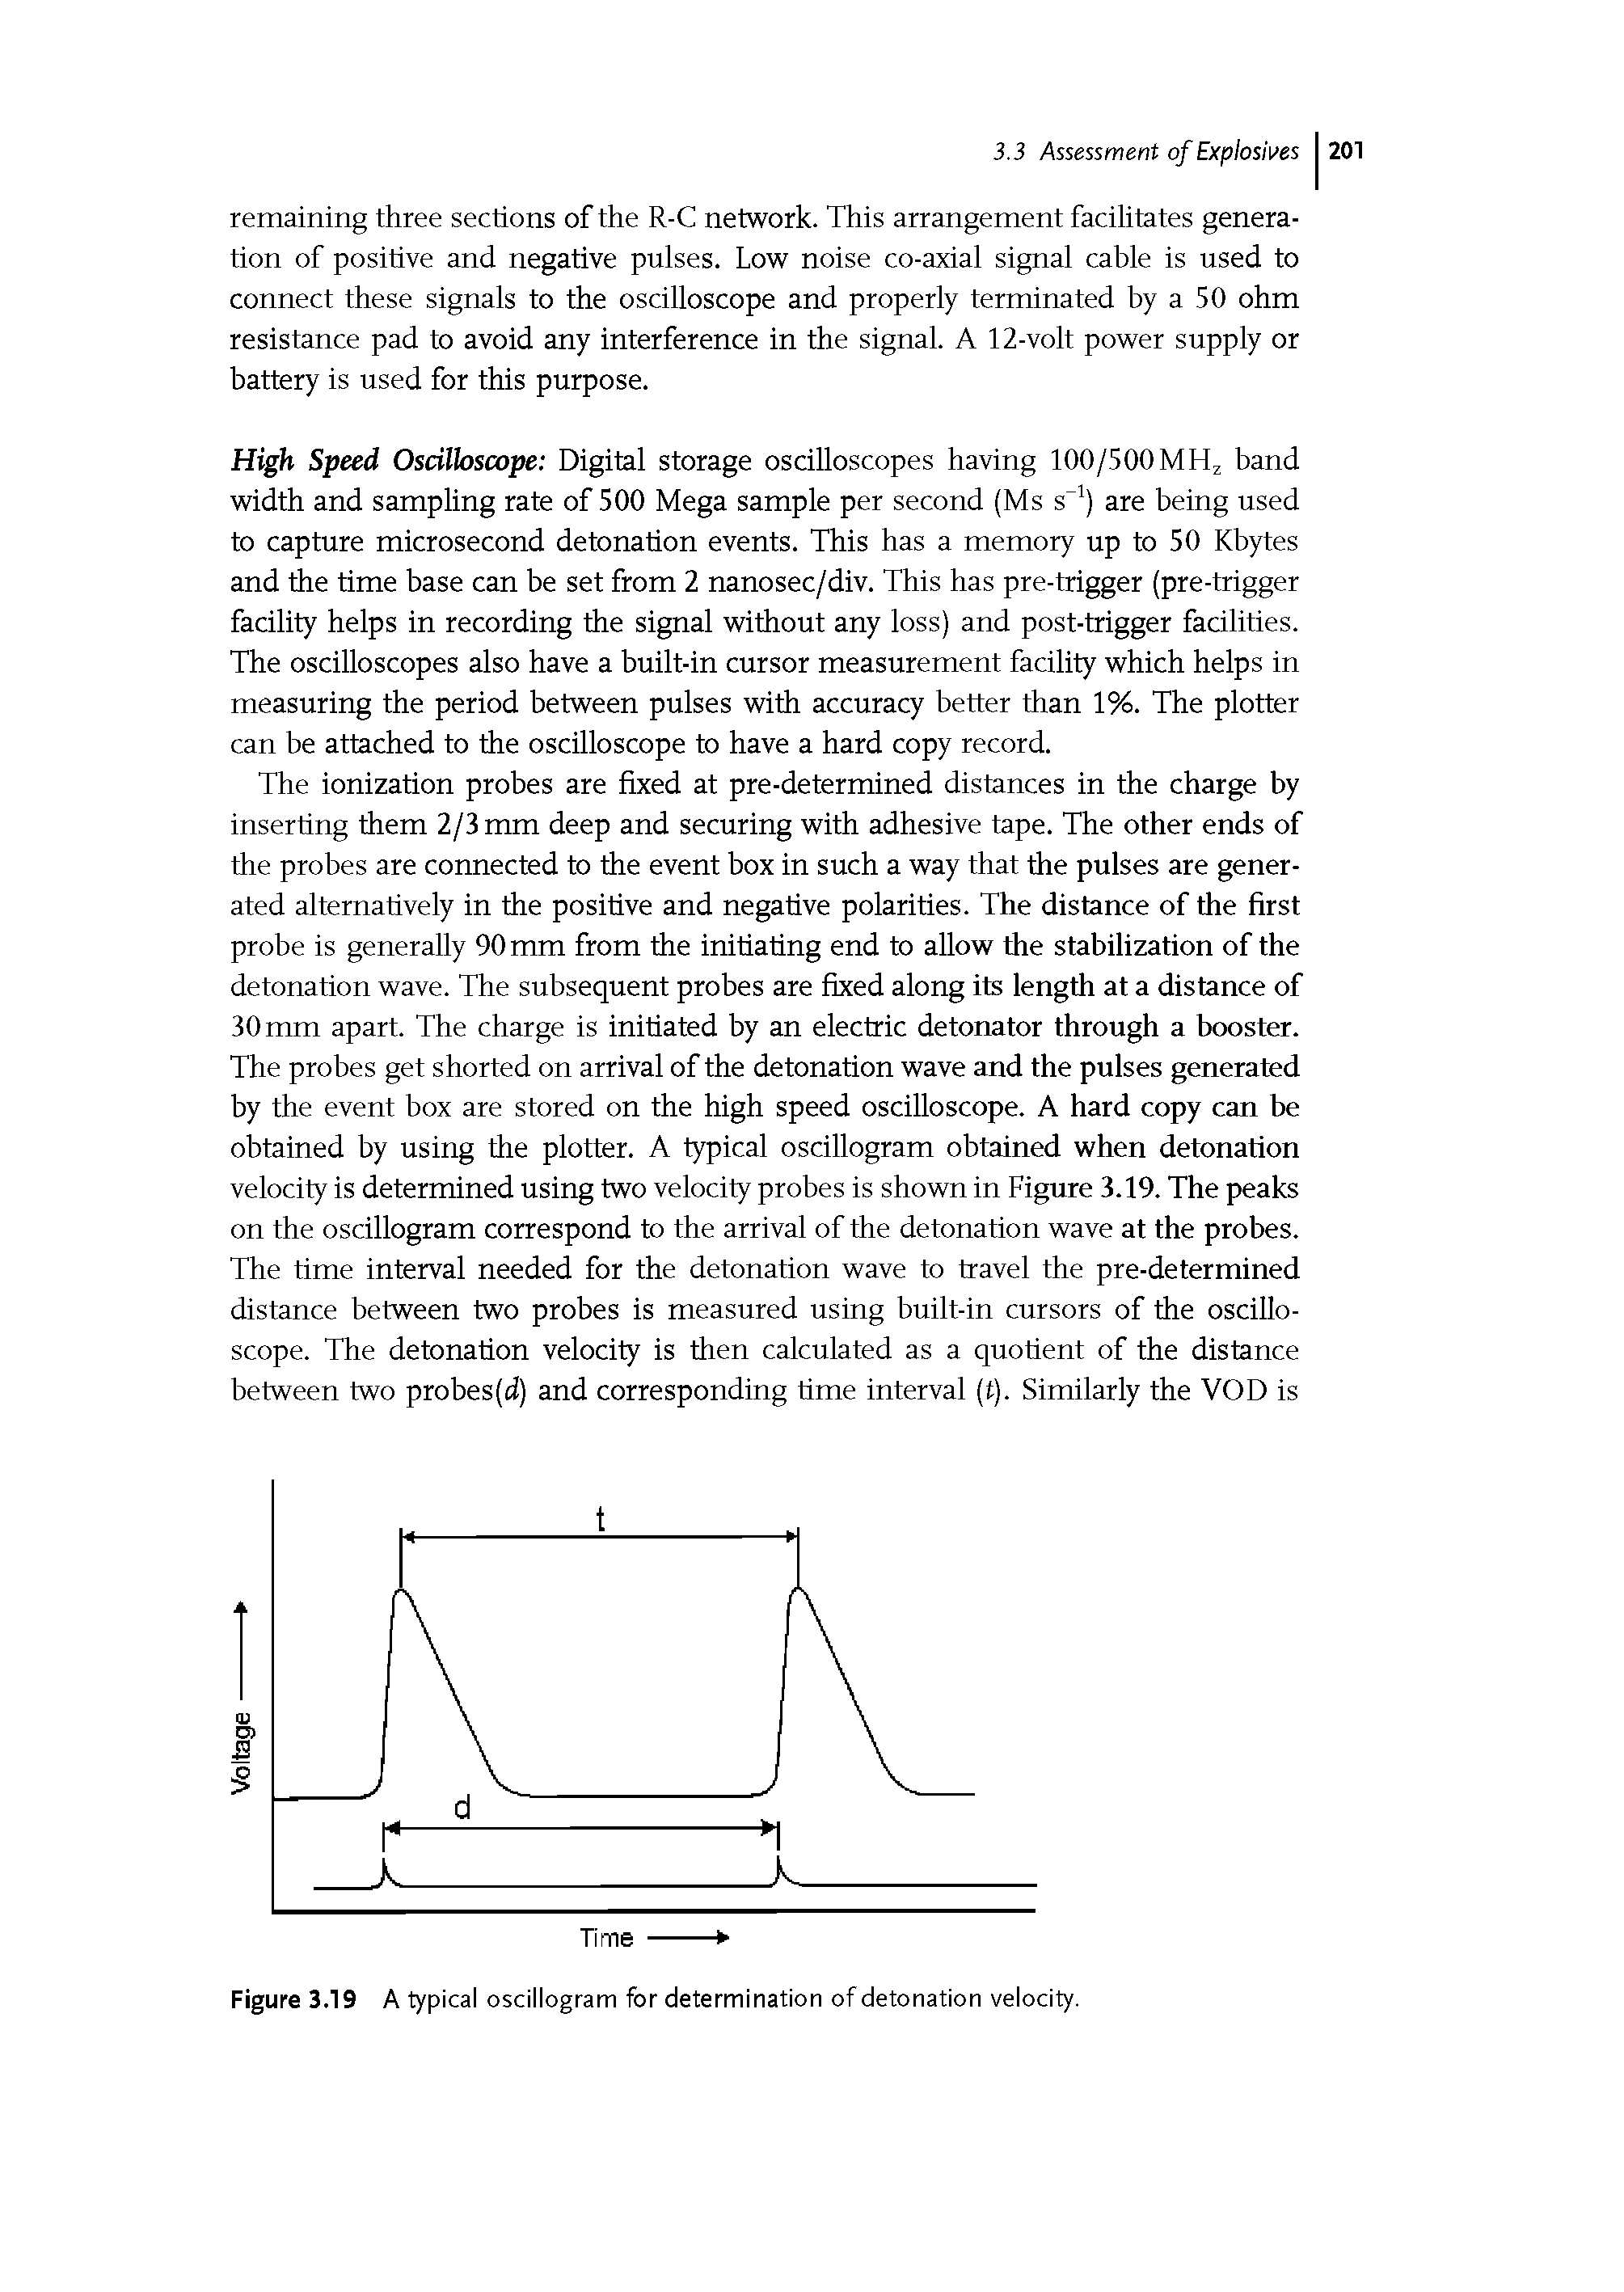 Figure 3.19 A typical oscillogram for determination of detonation velocity.